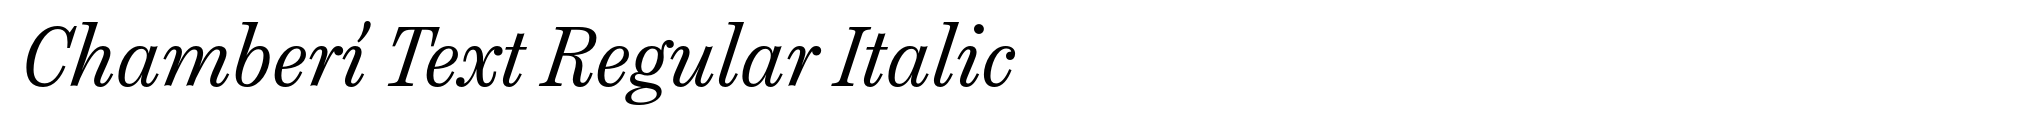 Chamberí Text Regular Italic image